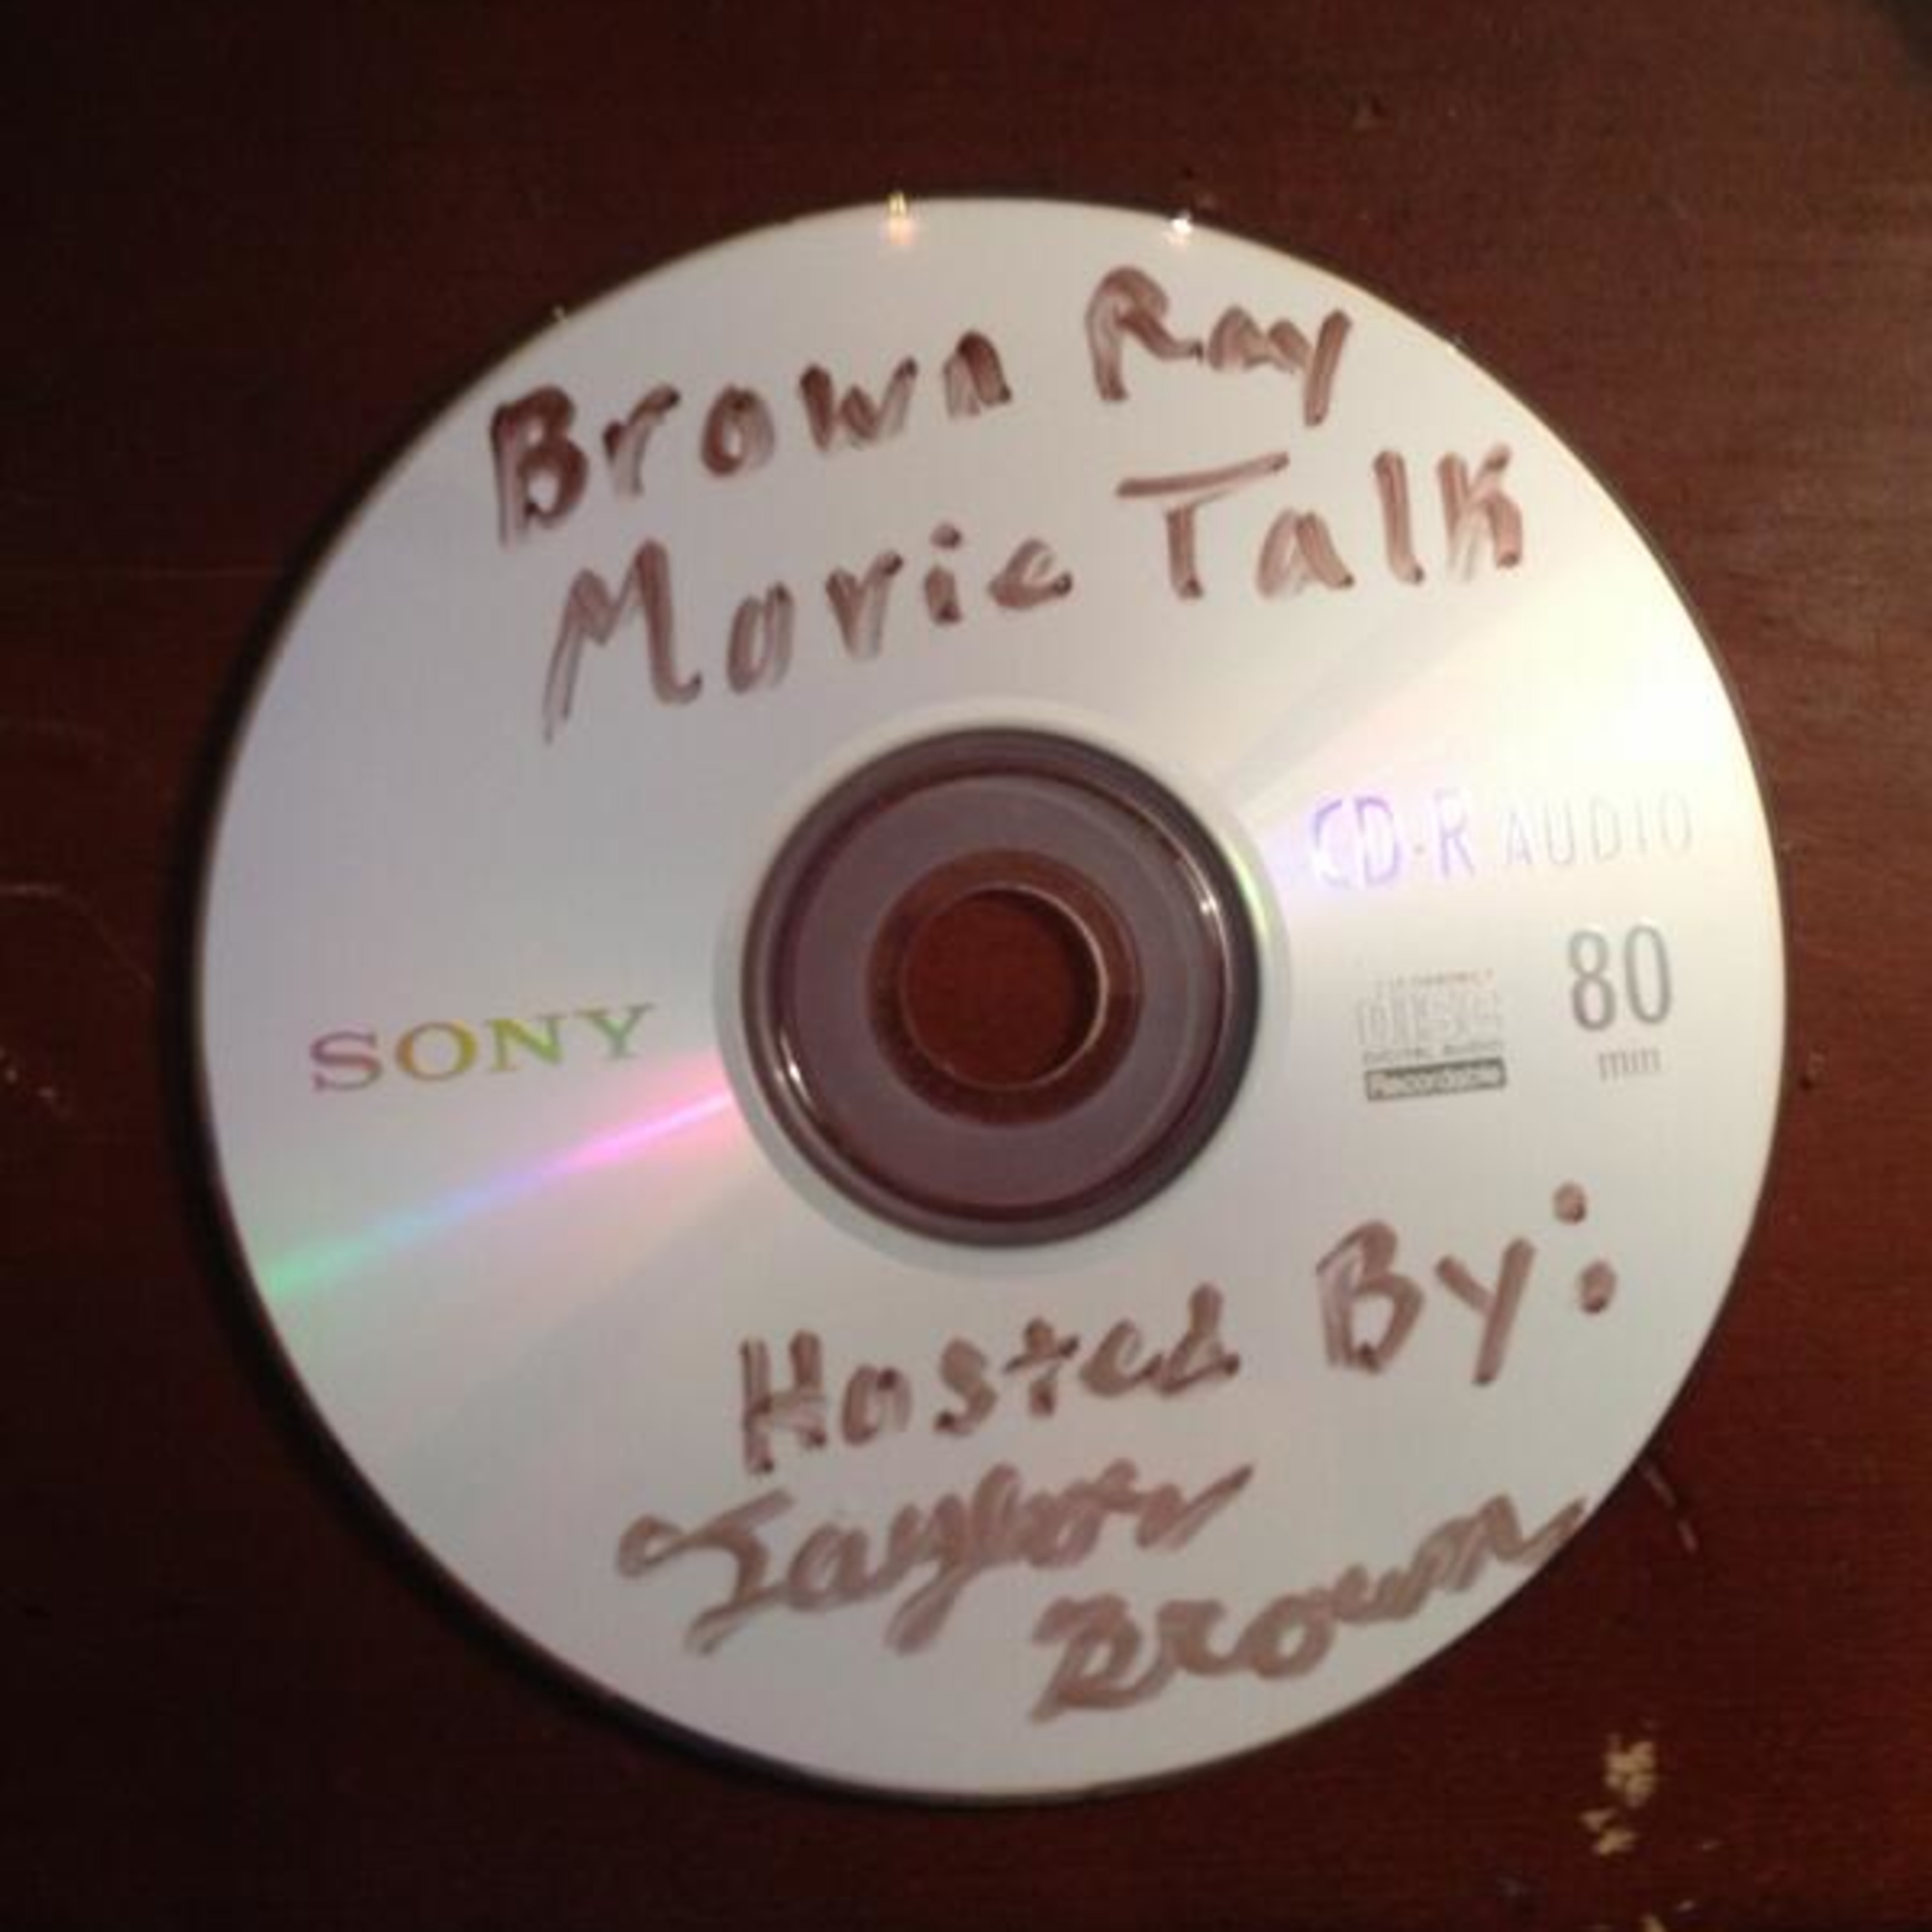 Brown Ray Movie Talk